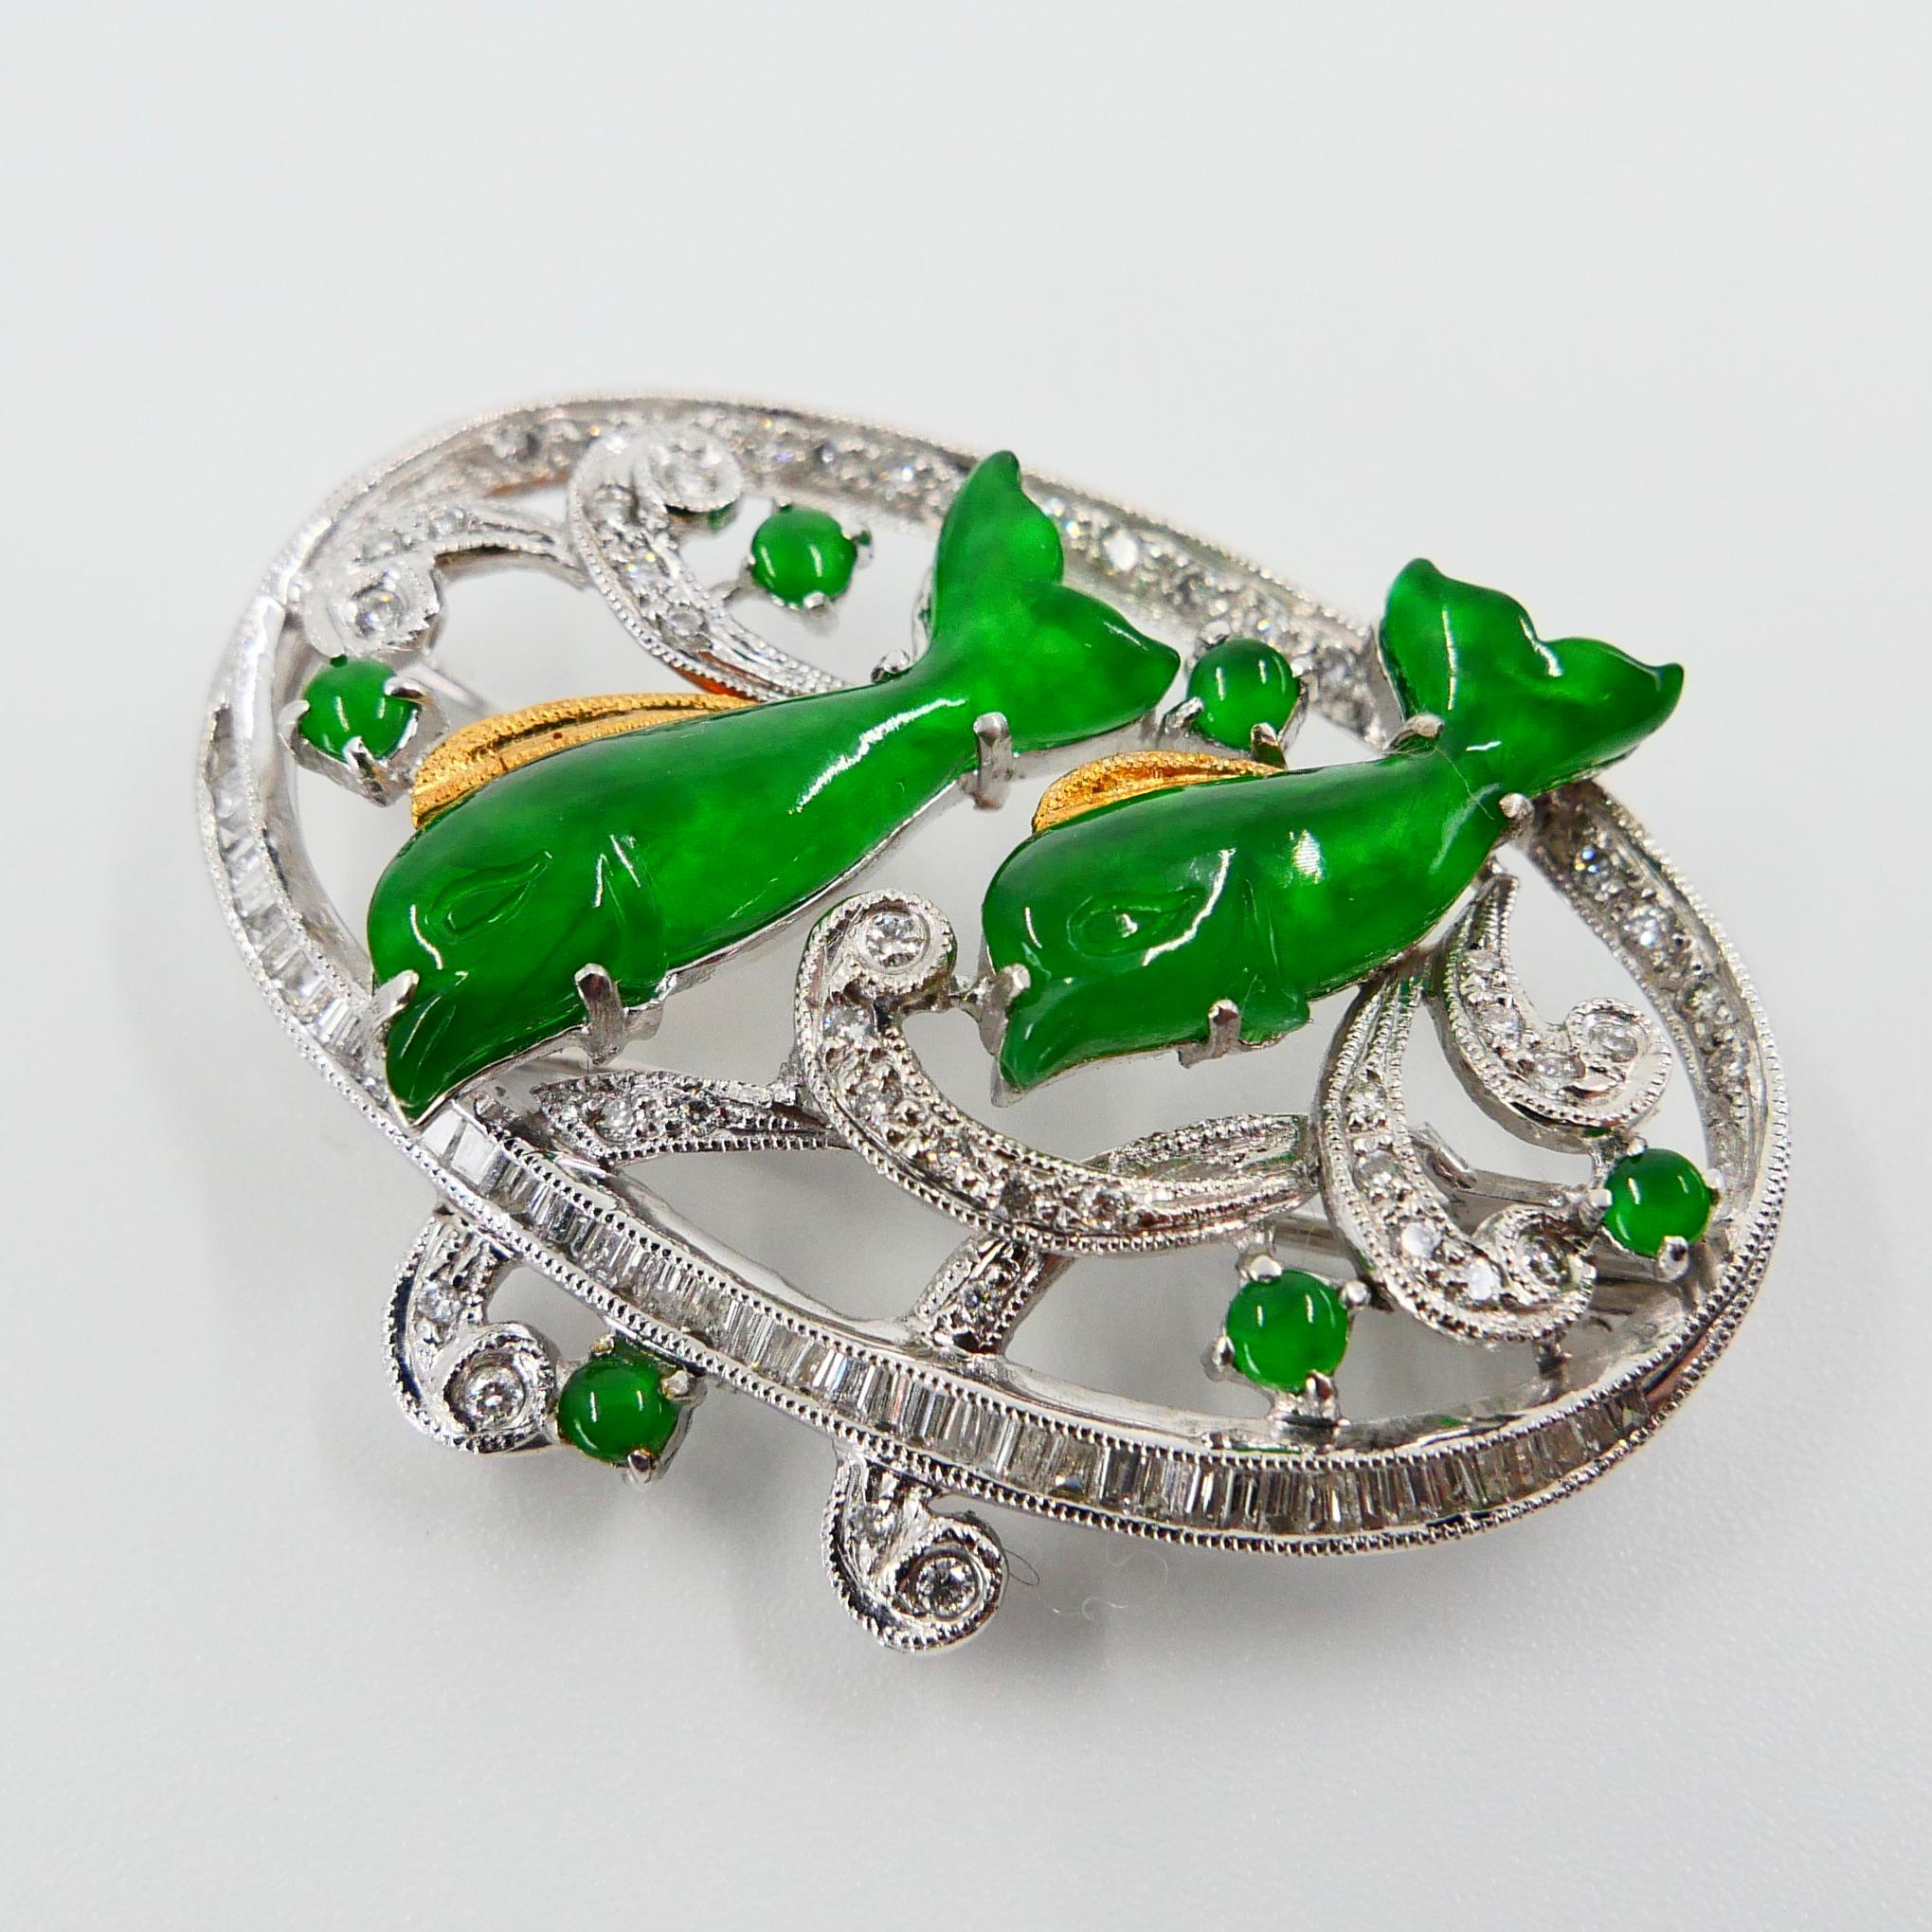 Broche pendentif en diamants et jade naturel certifié vert pomme vif, avec dauphins en vente 7